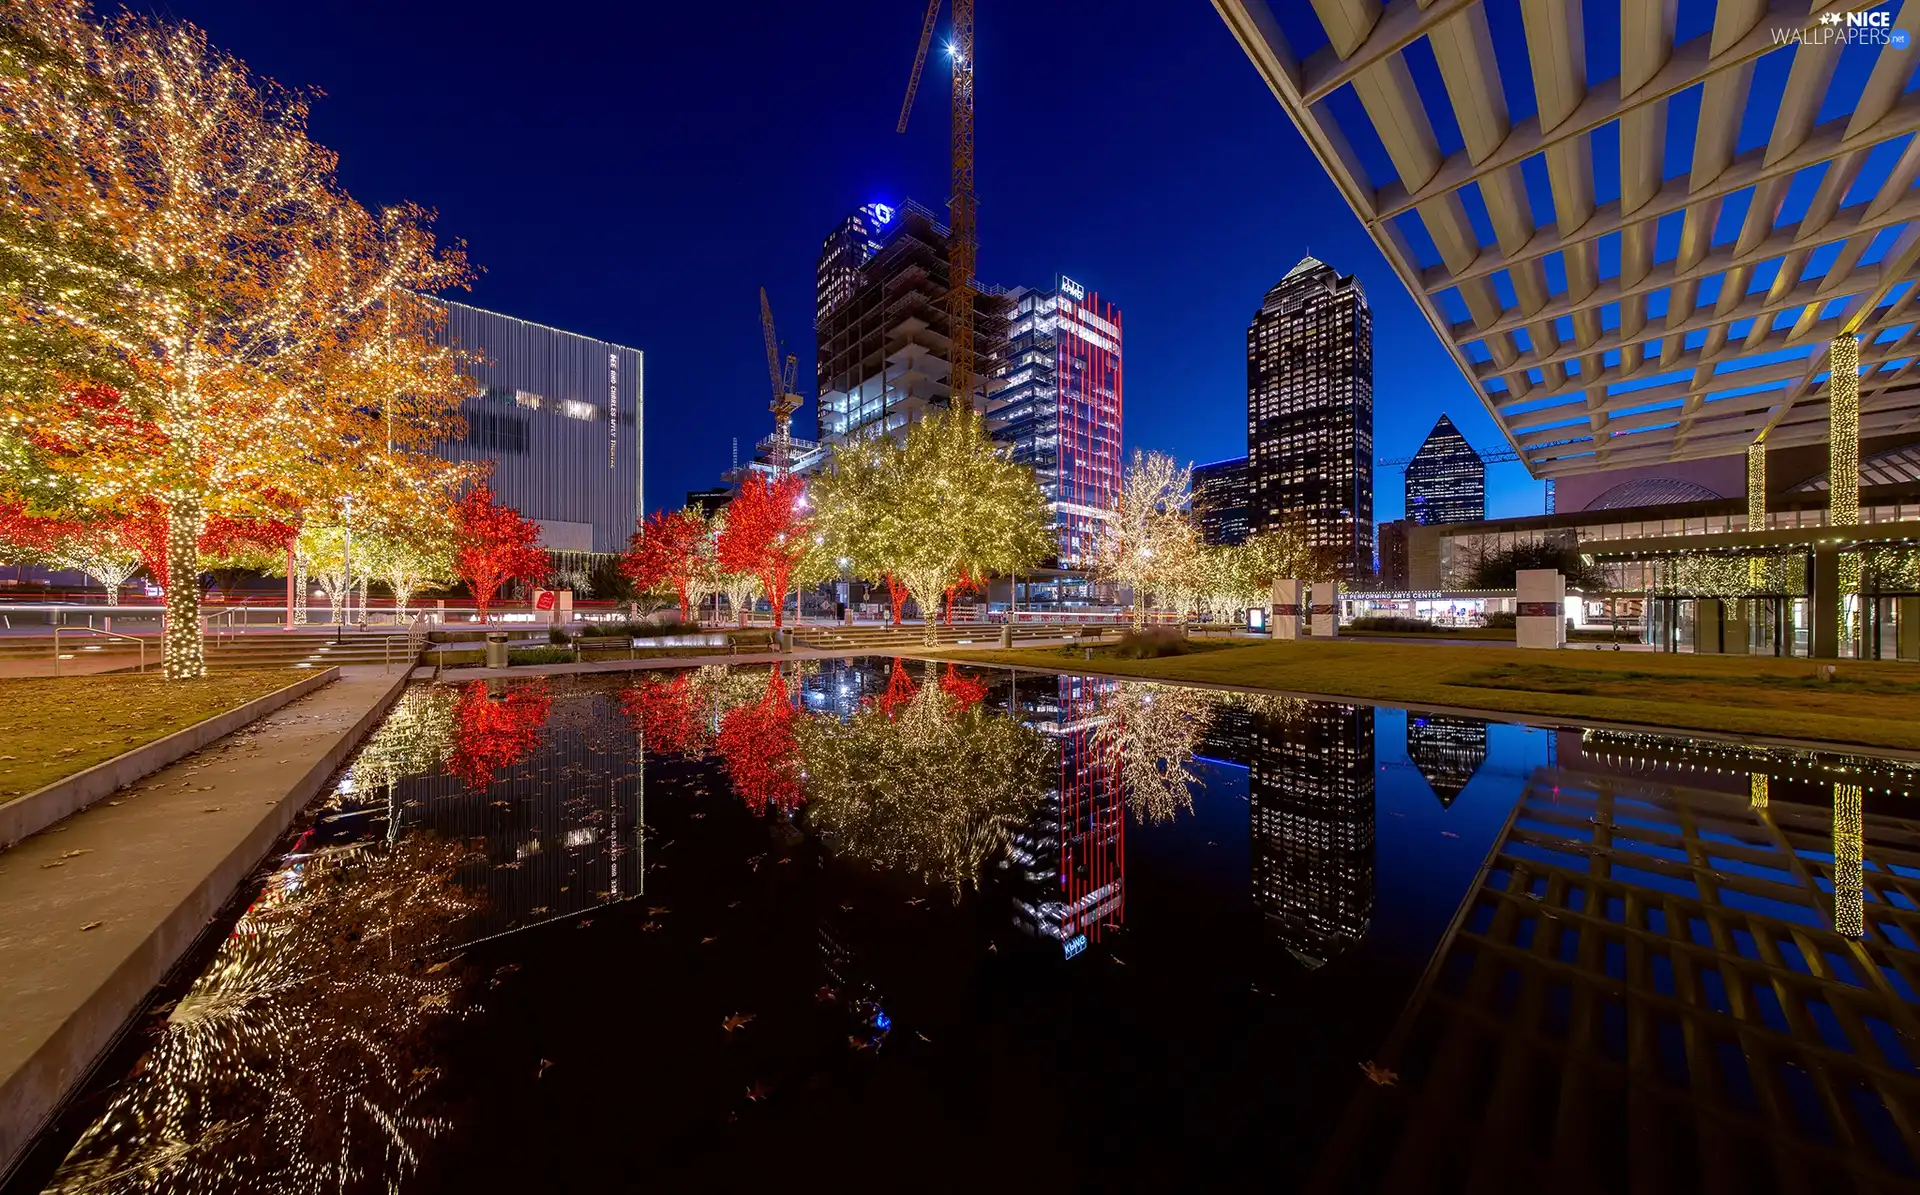 illuminated, Dallas, The United States, viewes, skyscrapers, City at Night, Teksas, Night, trees, pond